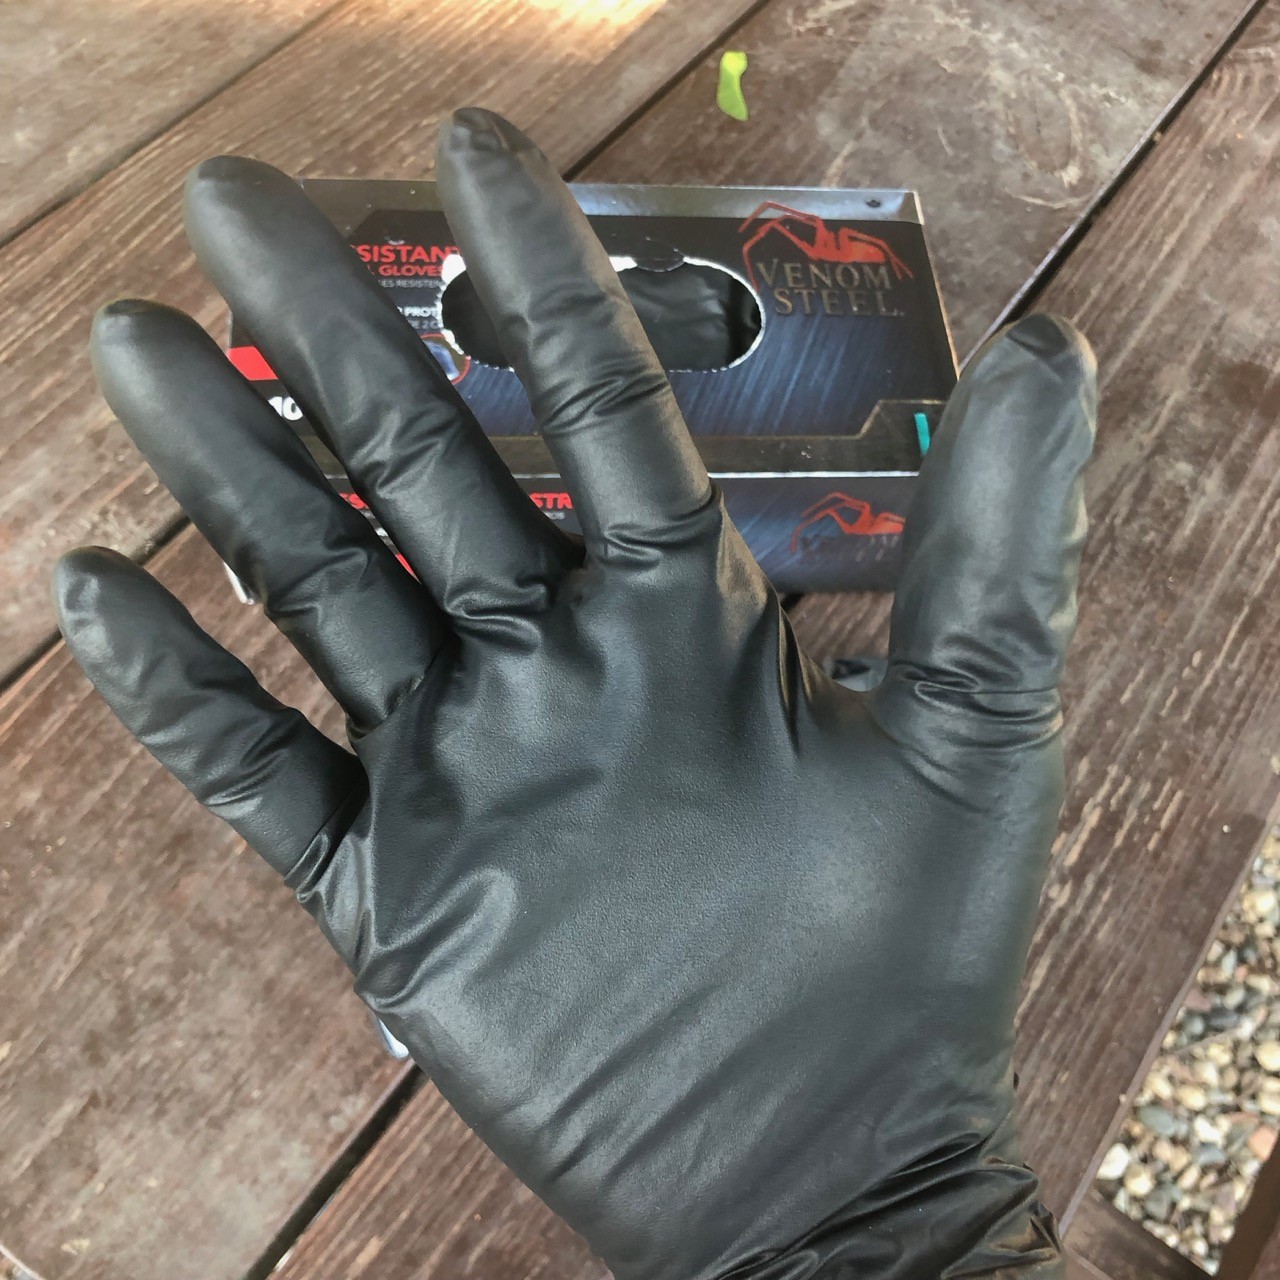 venom steel gloves review